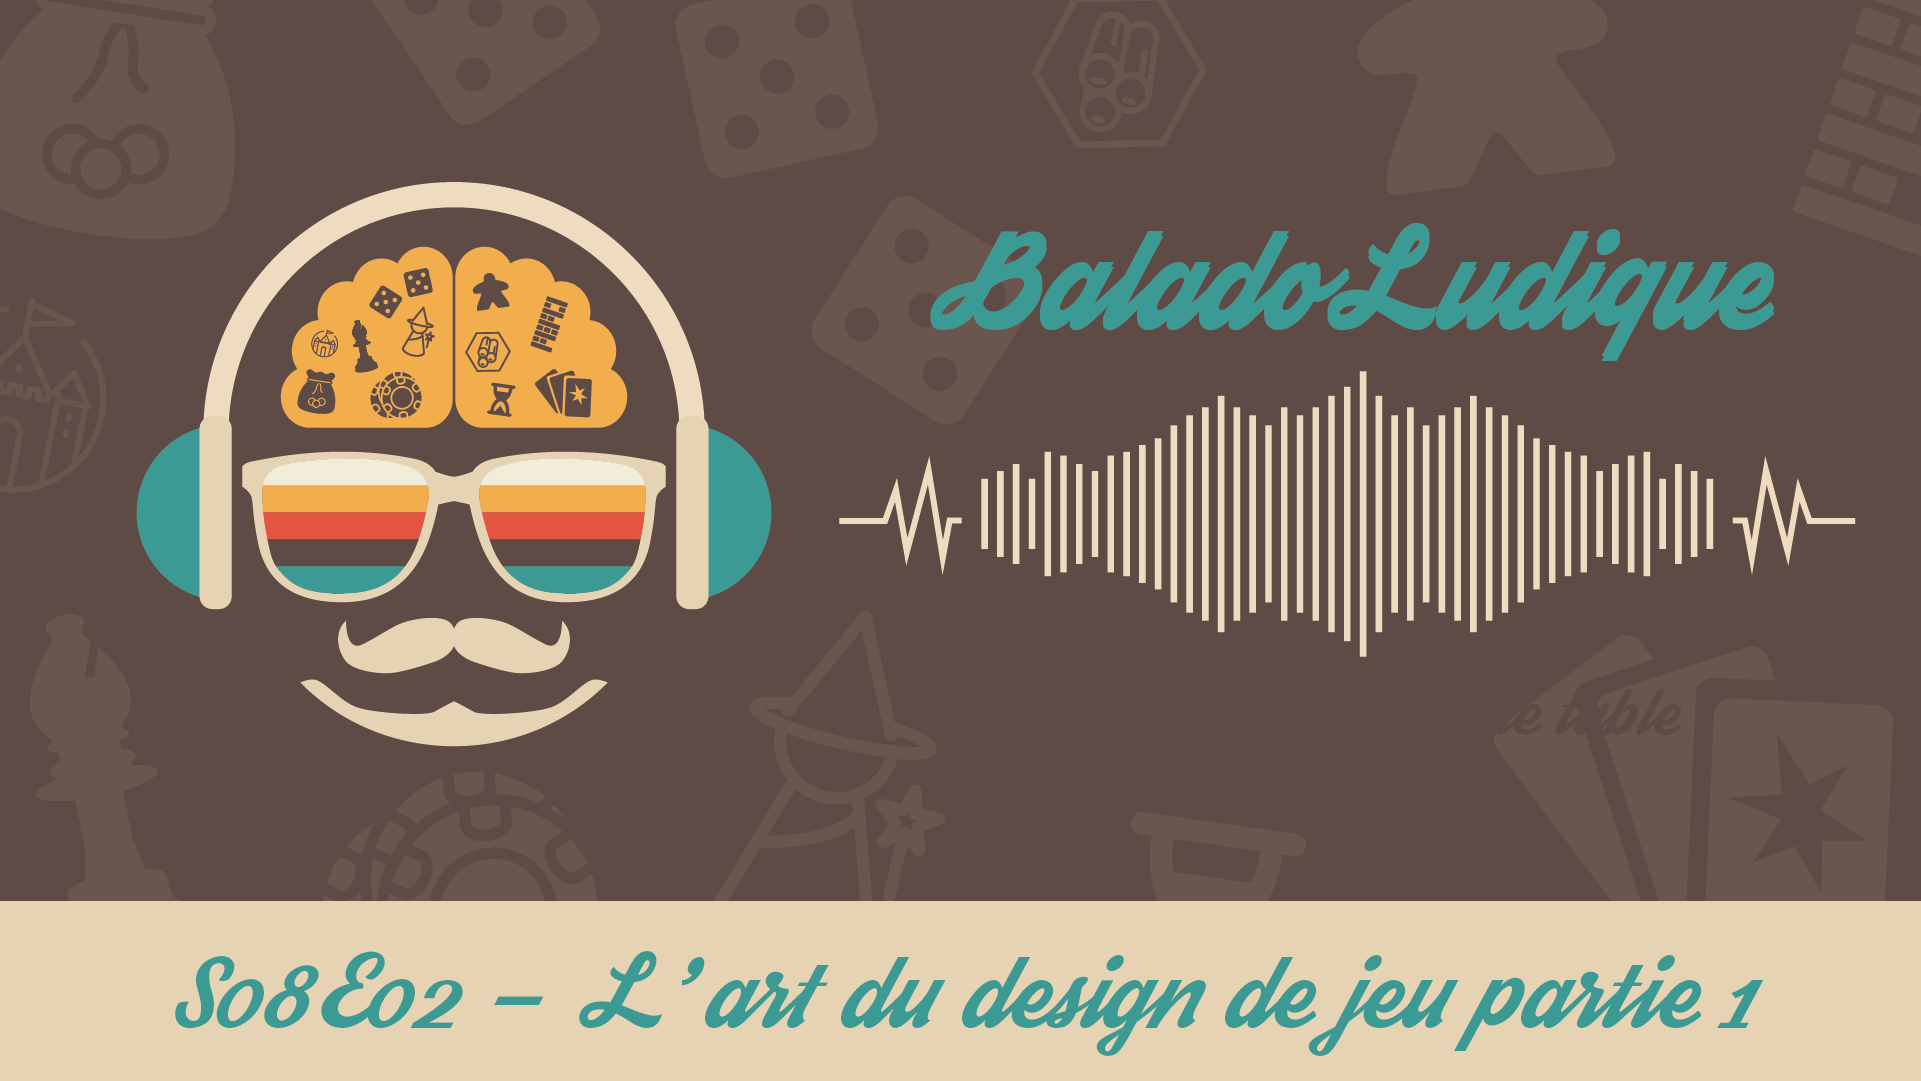 L'art du design de jeu (partie 1) - BaladoLudique - s08-e02